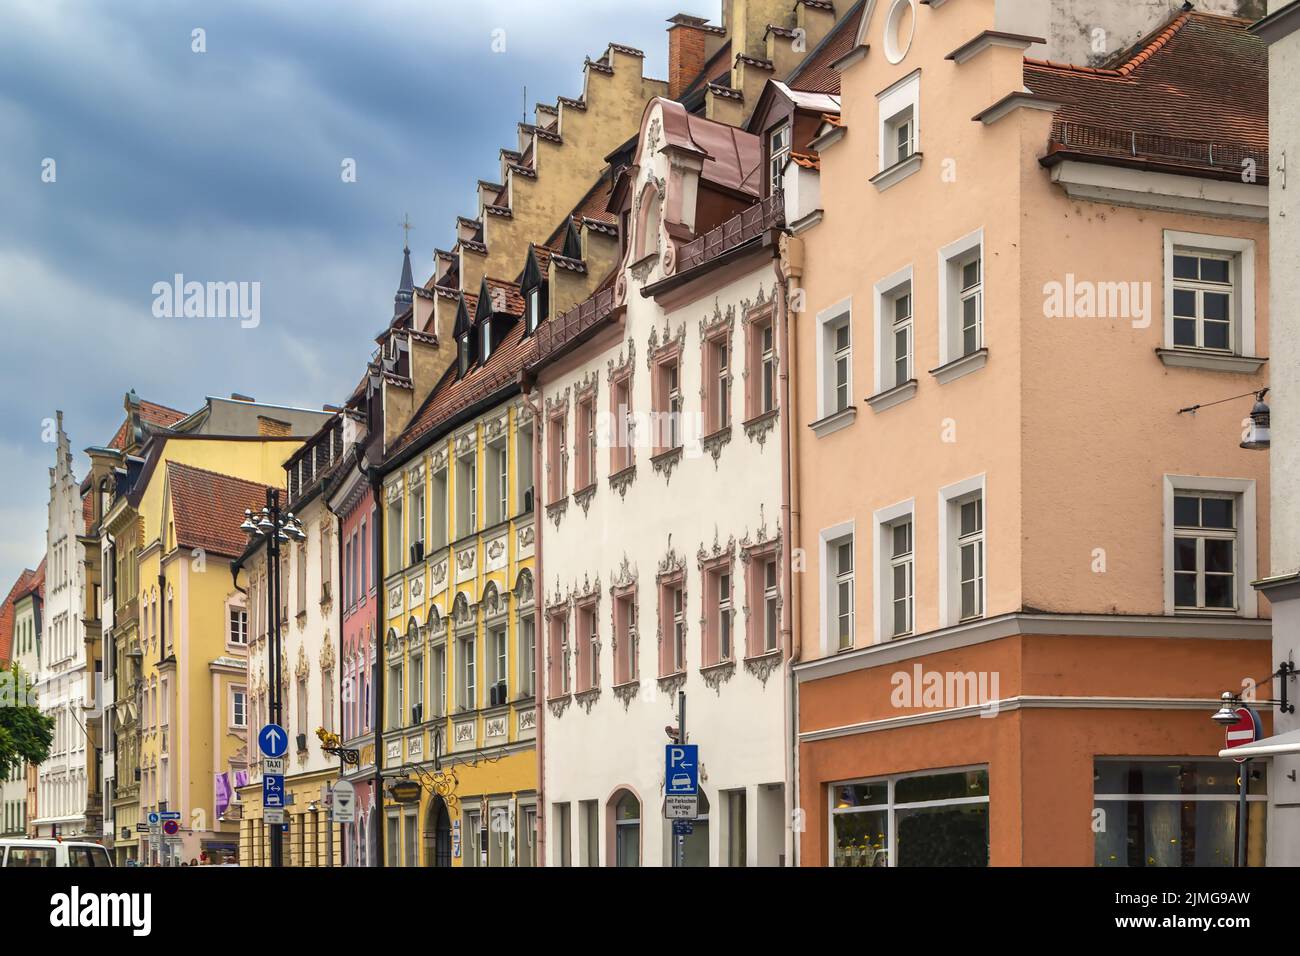 Street in Straubing, Germany Stock Photo